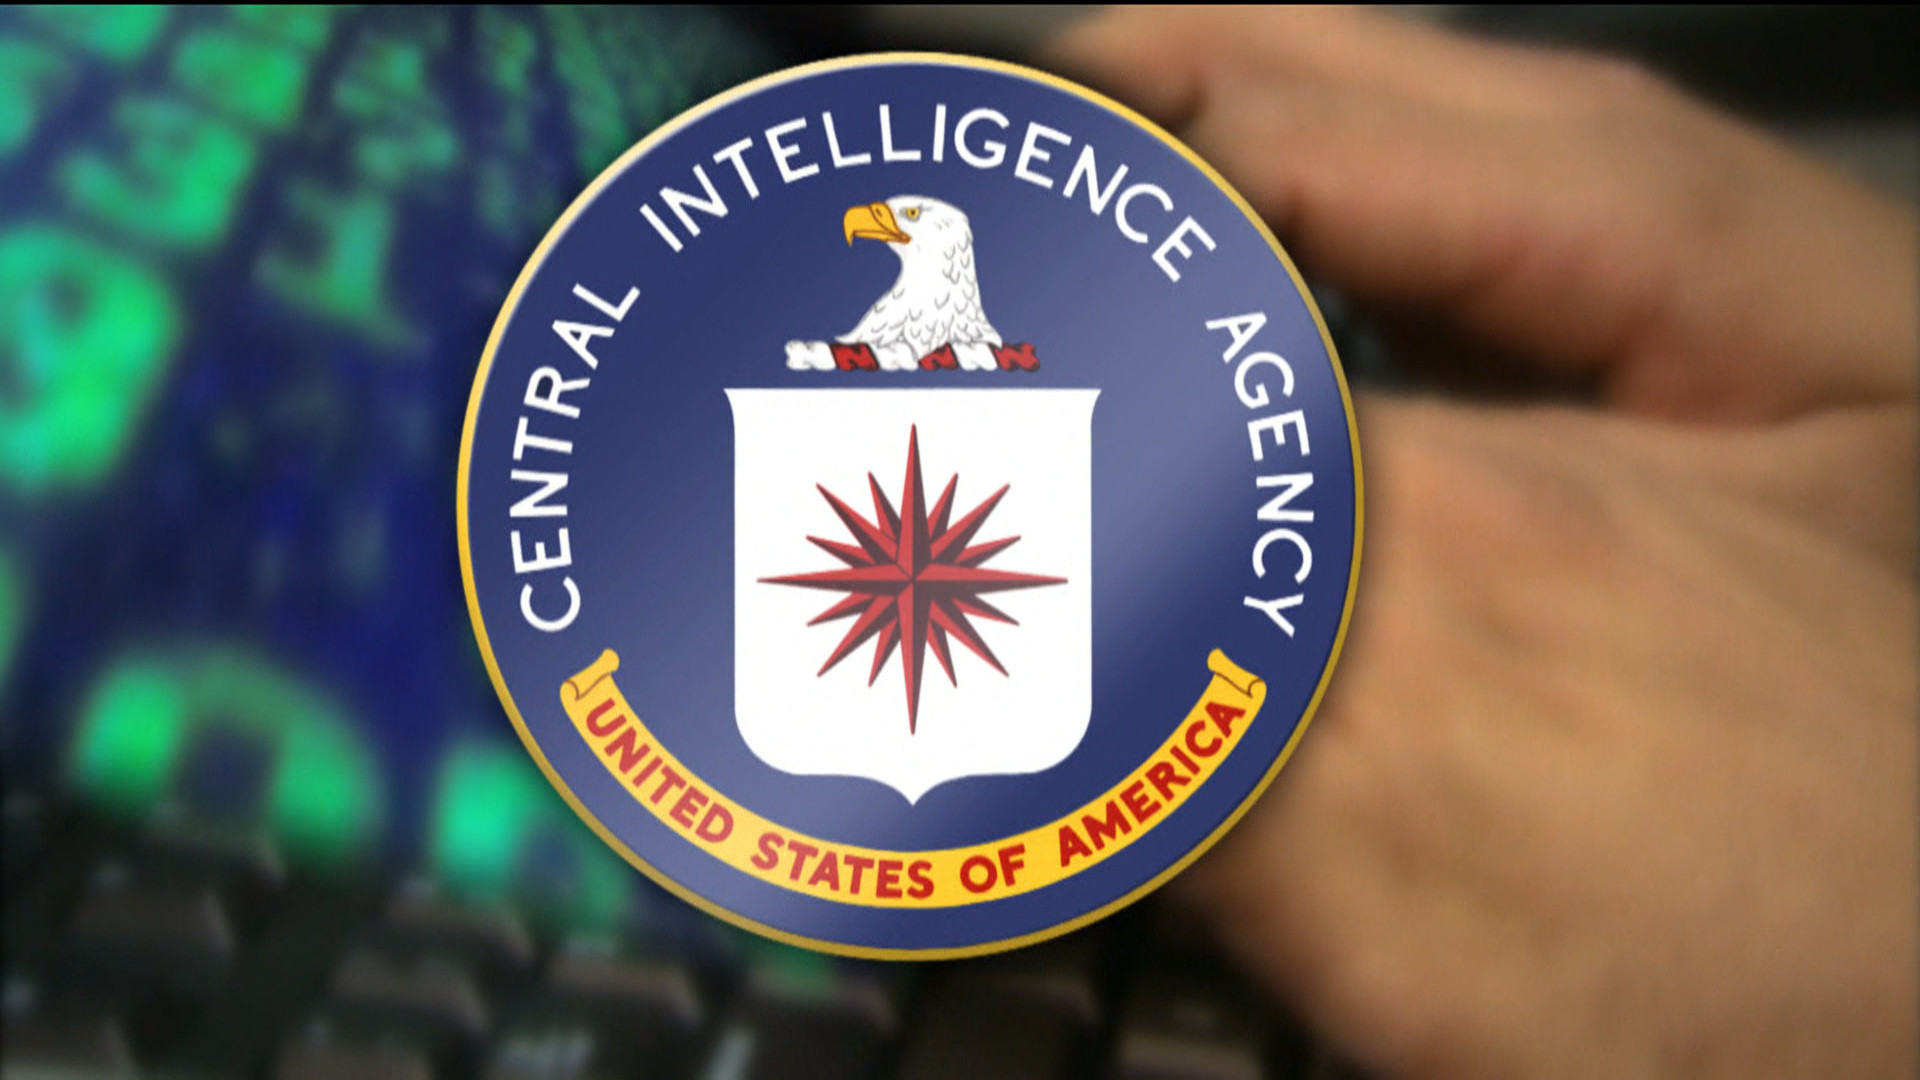 CIA Director Brennan Apologizes to Senate Leaders for Computer Hack – NBC News